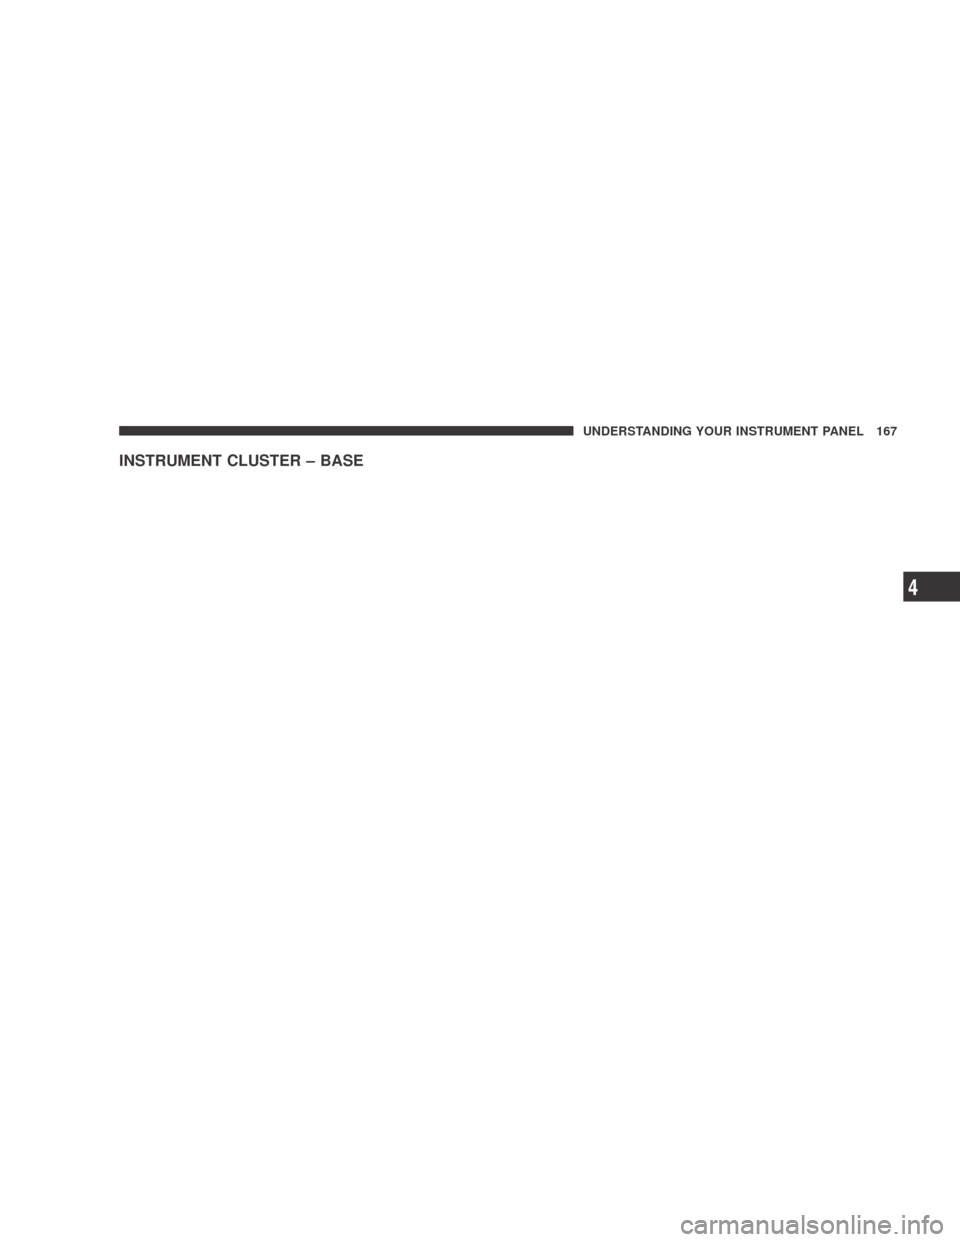 DODGE CALIBER 2009 1.G Owners Manual INSTRUMENT CLUSTER – BASE
UNDERSTANDING YOUR INSTRUMENT PANEL 167
4 